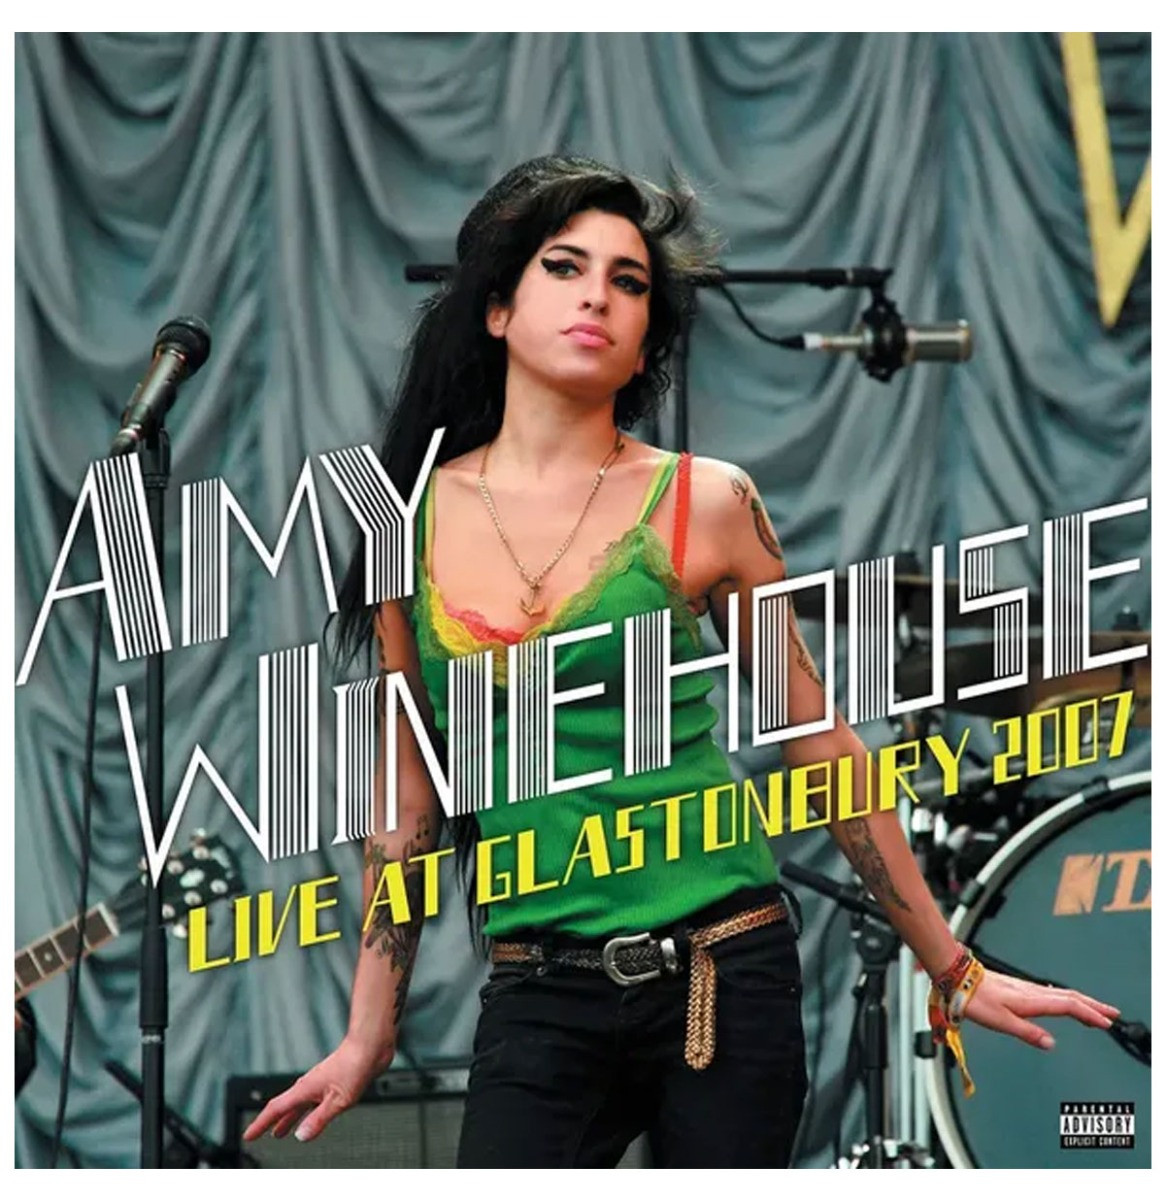 Amy Winehouse - Live At Glastonbury 2007 - 2-LP